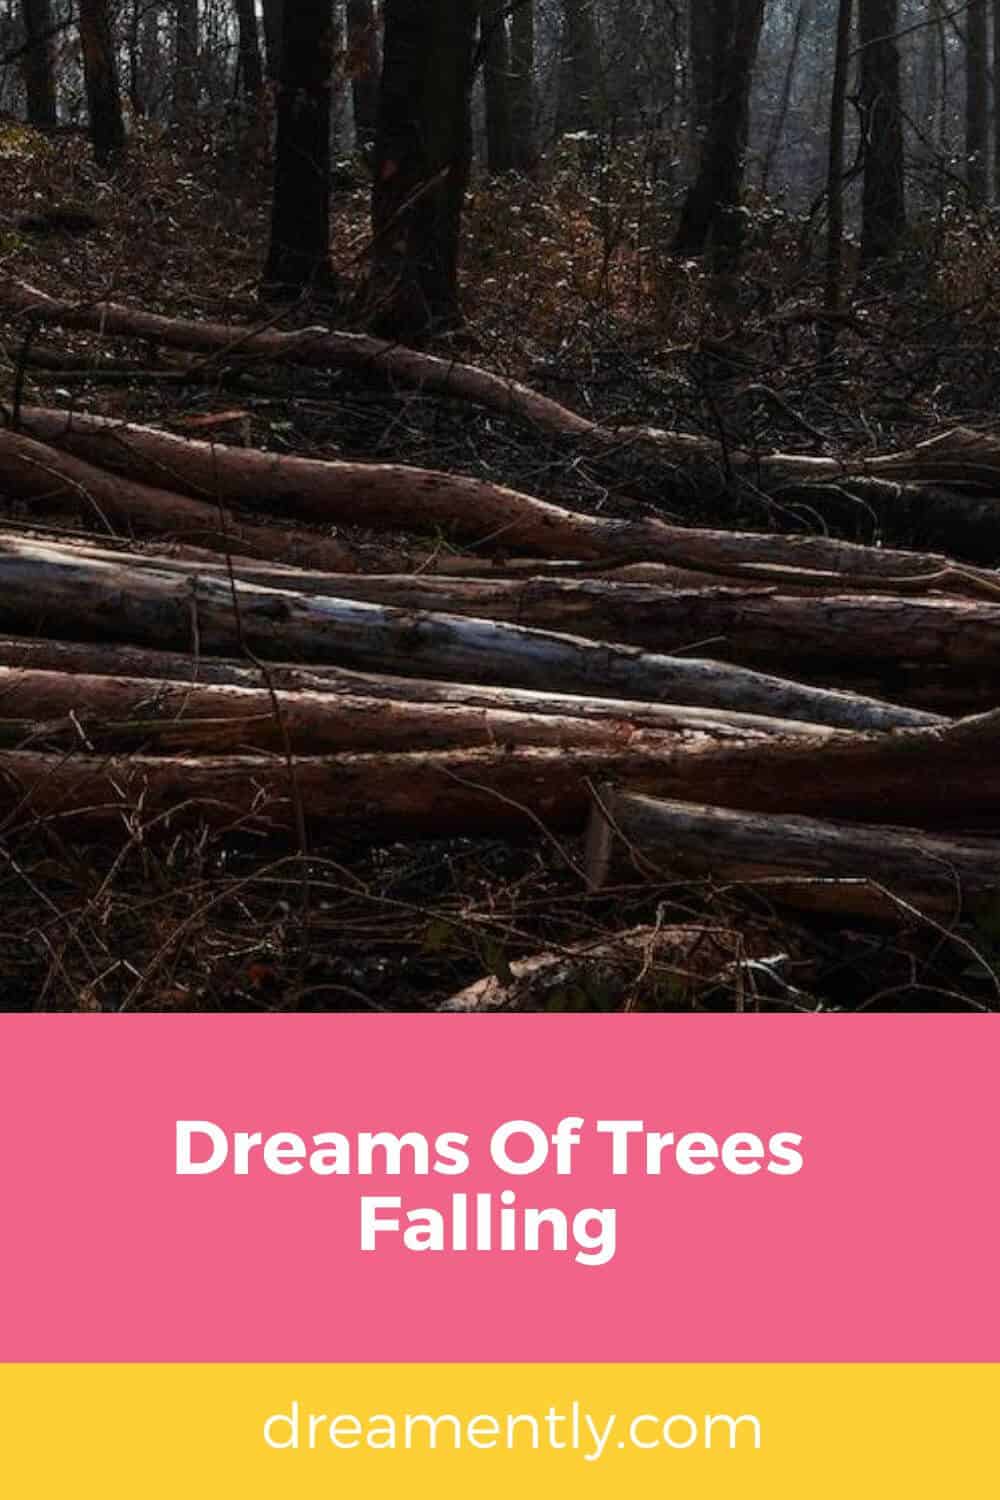 Dreams Of Trees Falling (2)